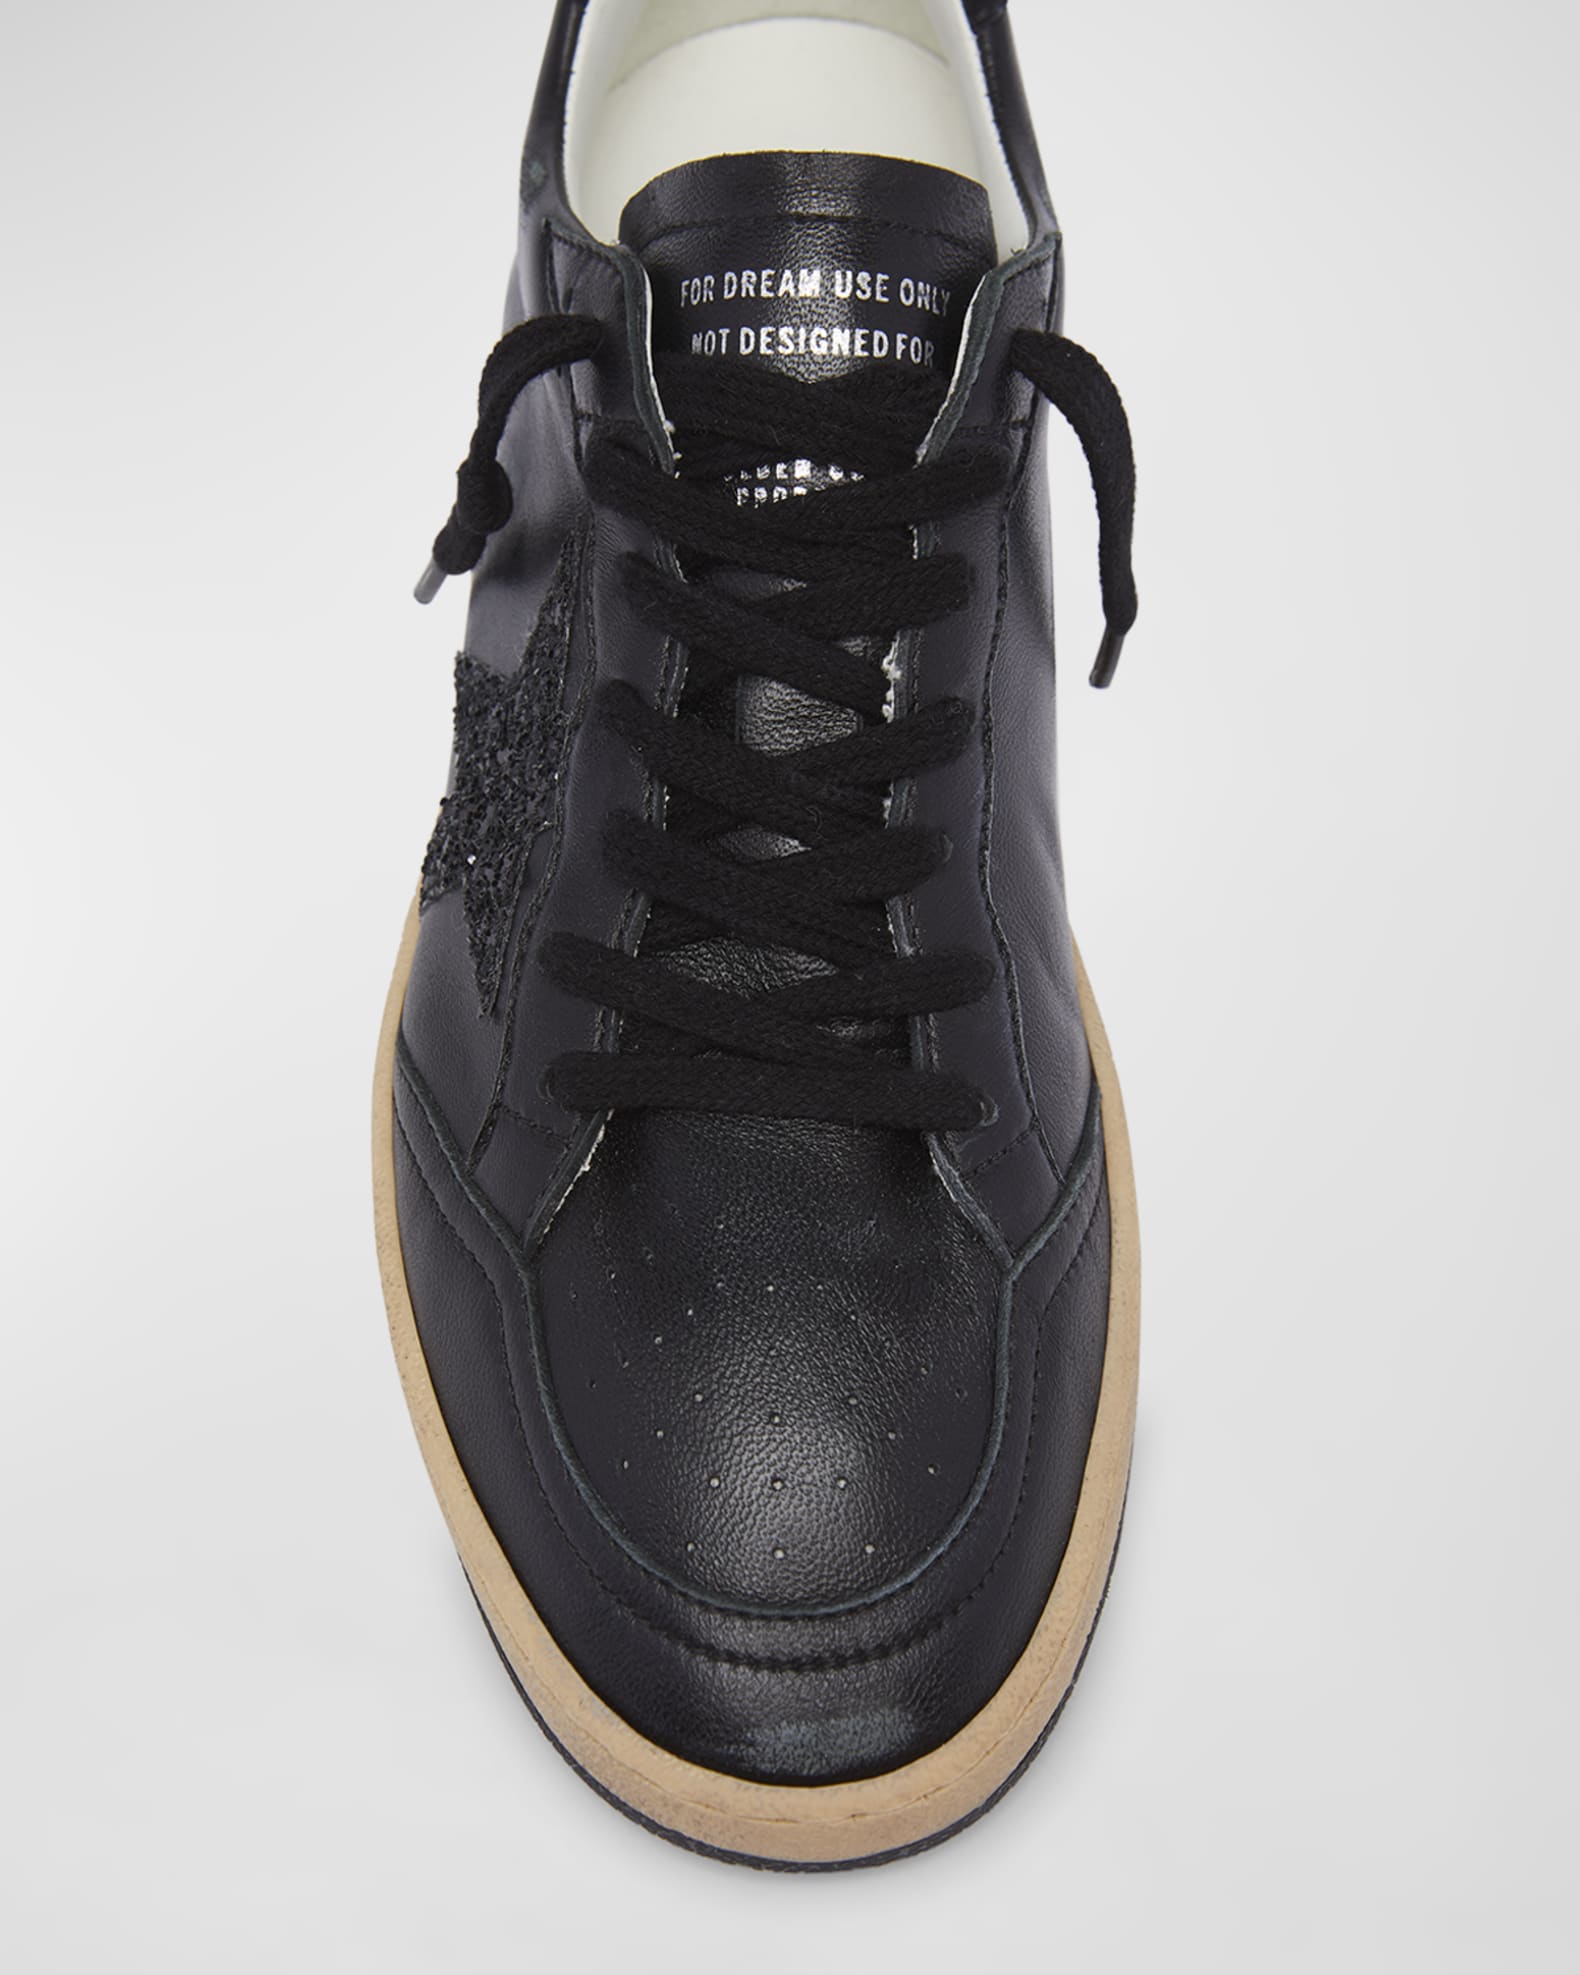 Golden Goose Ball Star Glitter Napa Leather Sneakers | Neiman Marcus